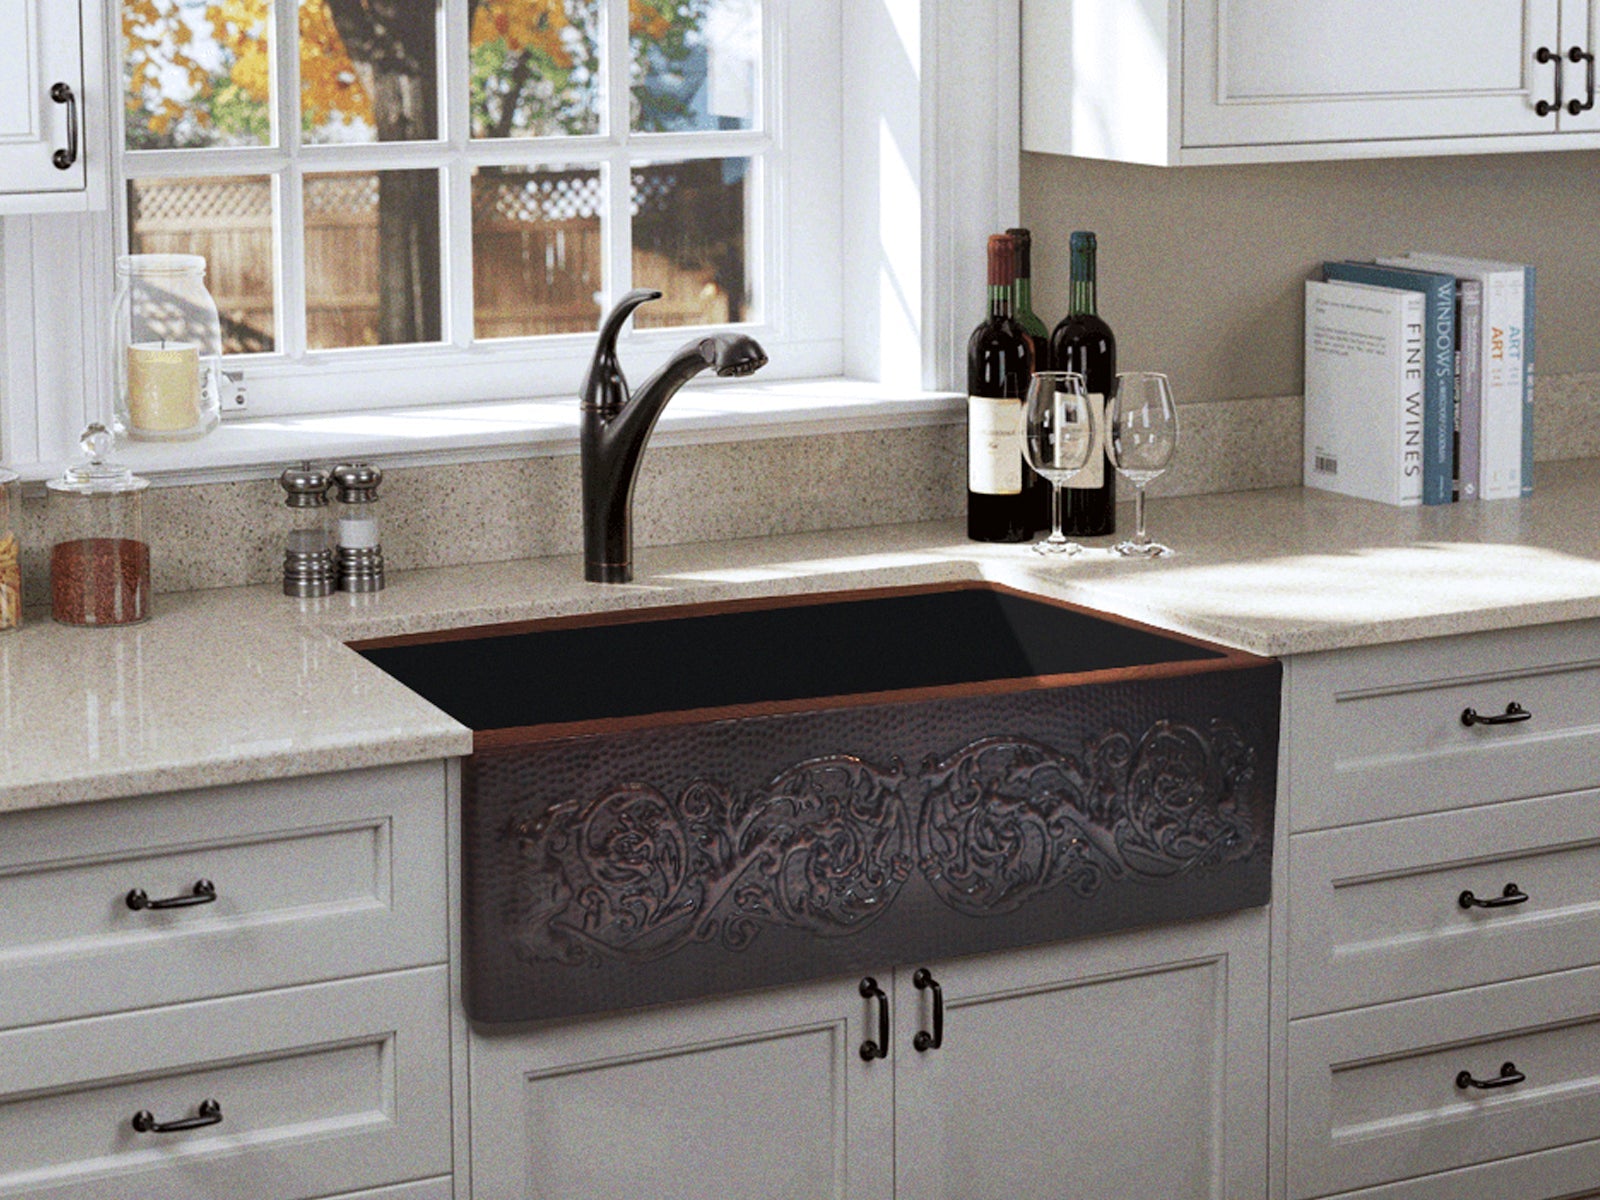 Copper Farmhouse Kitchen Sink With Design